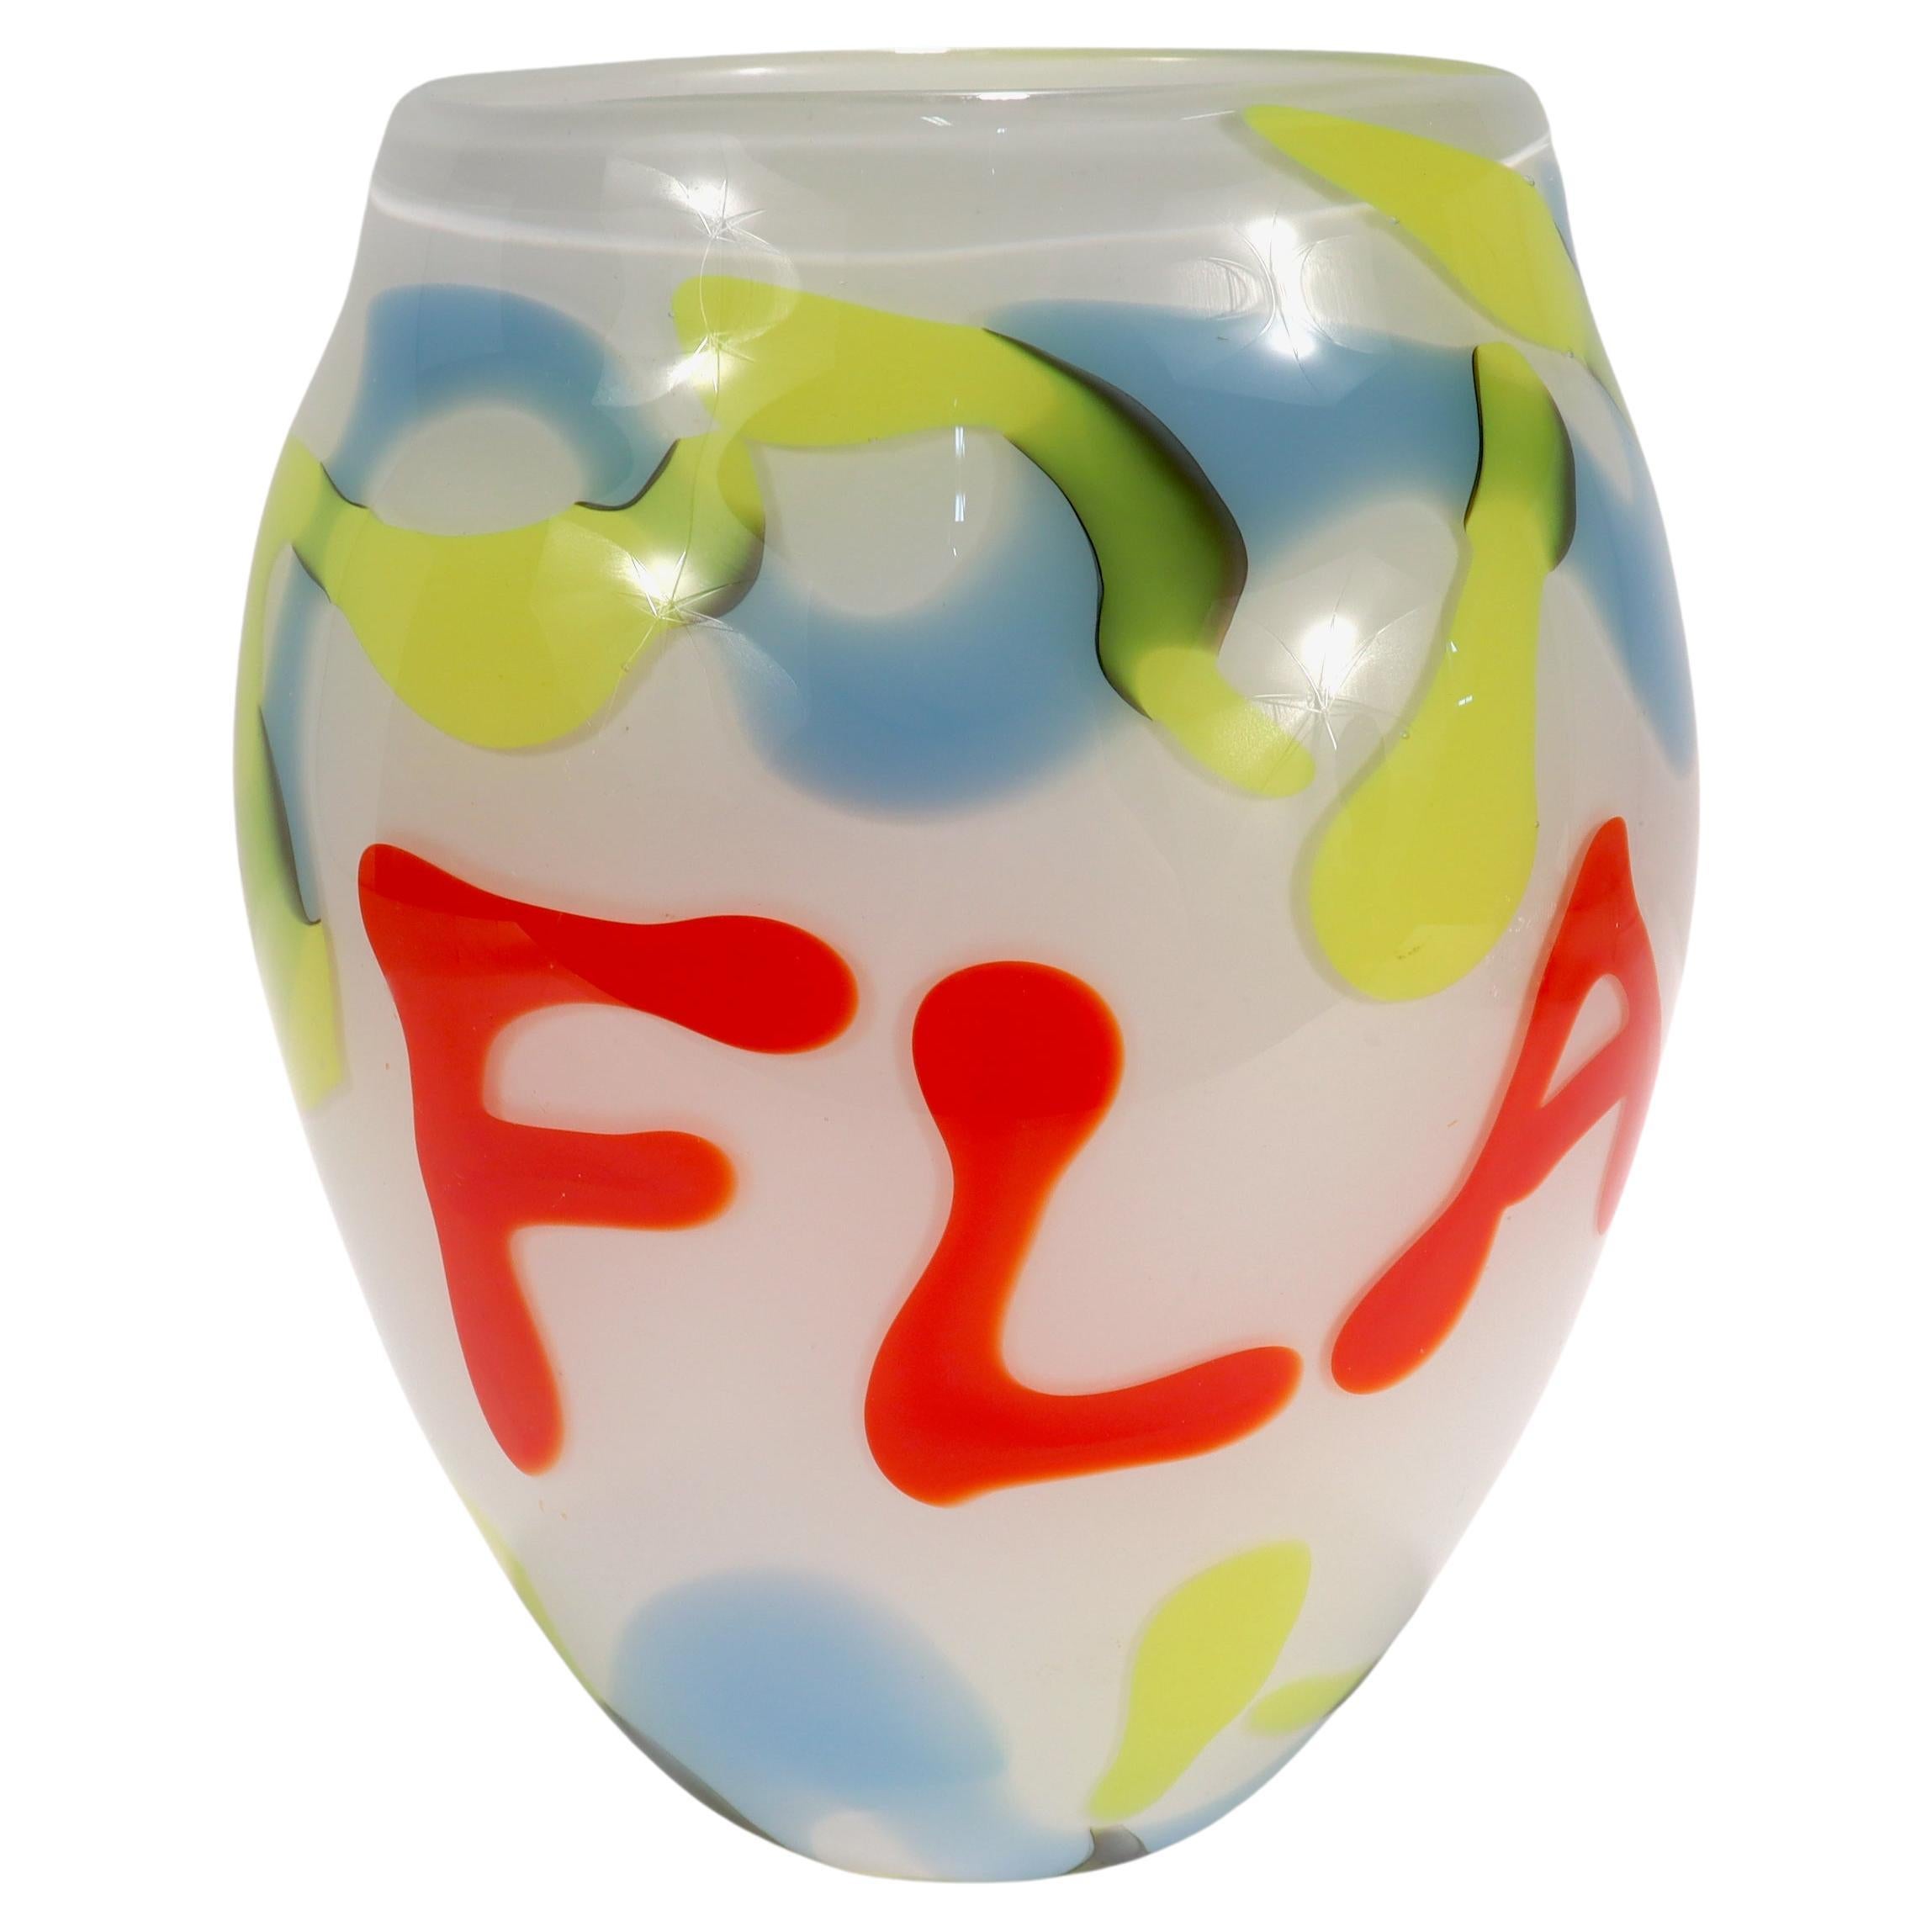 "FLASH" Pop-Art Cased Art Glass Vase in White, Blue, Yellow, & Red, 1999